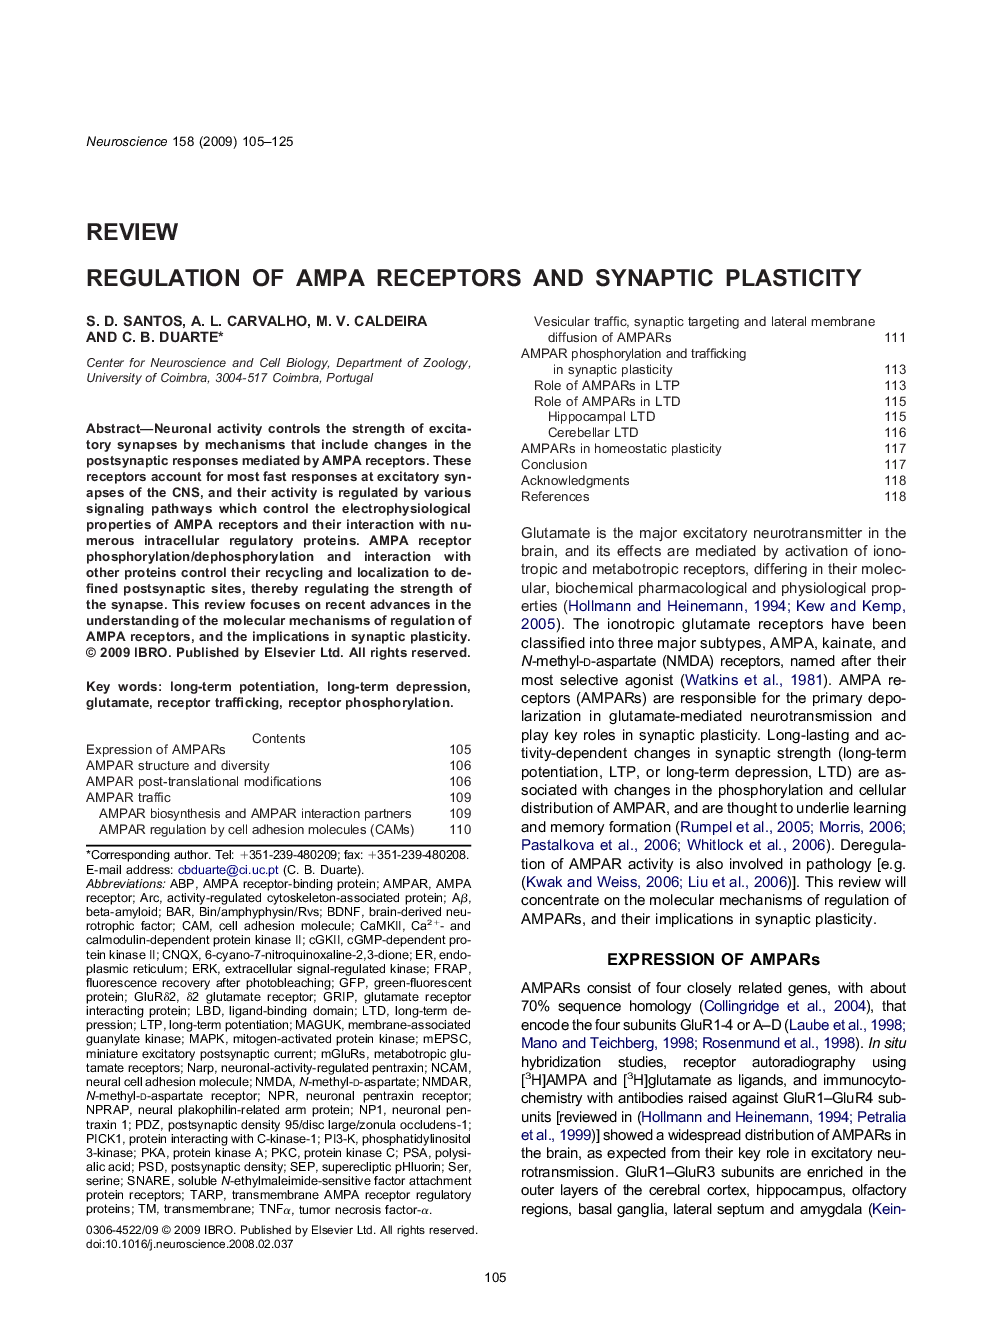 Regulation of AMPA receptors and synaptic plasticity